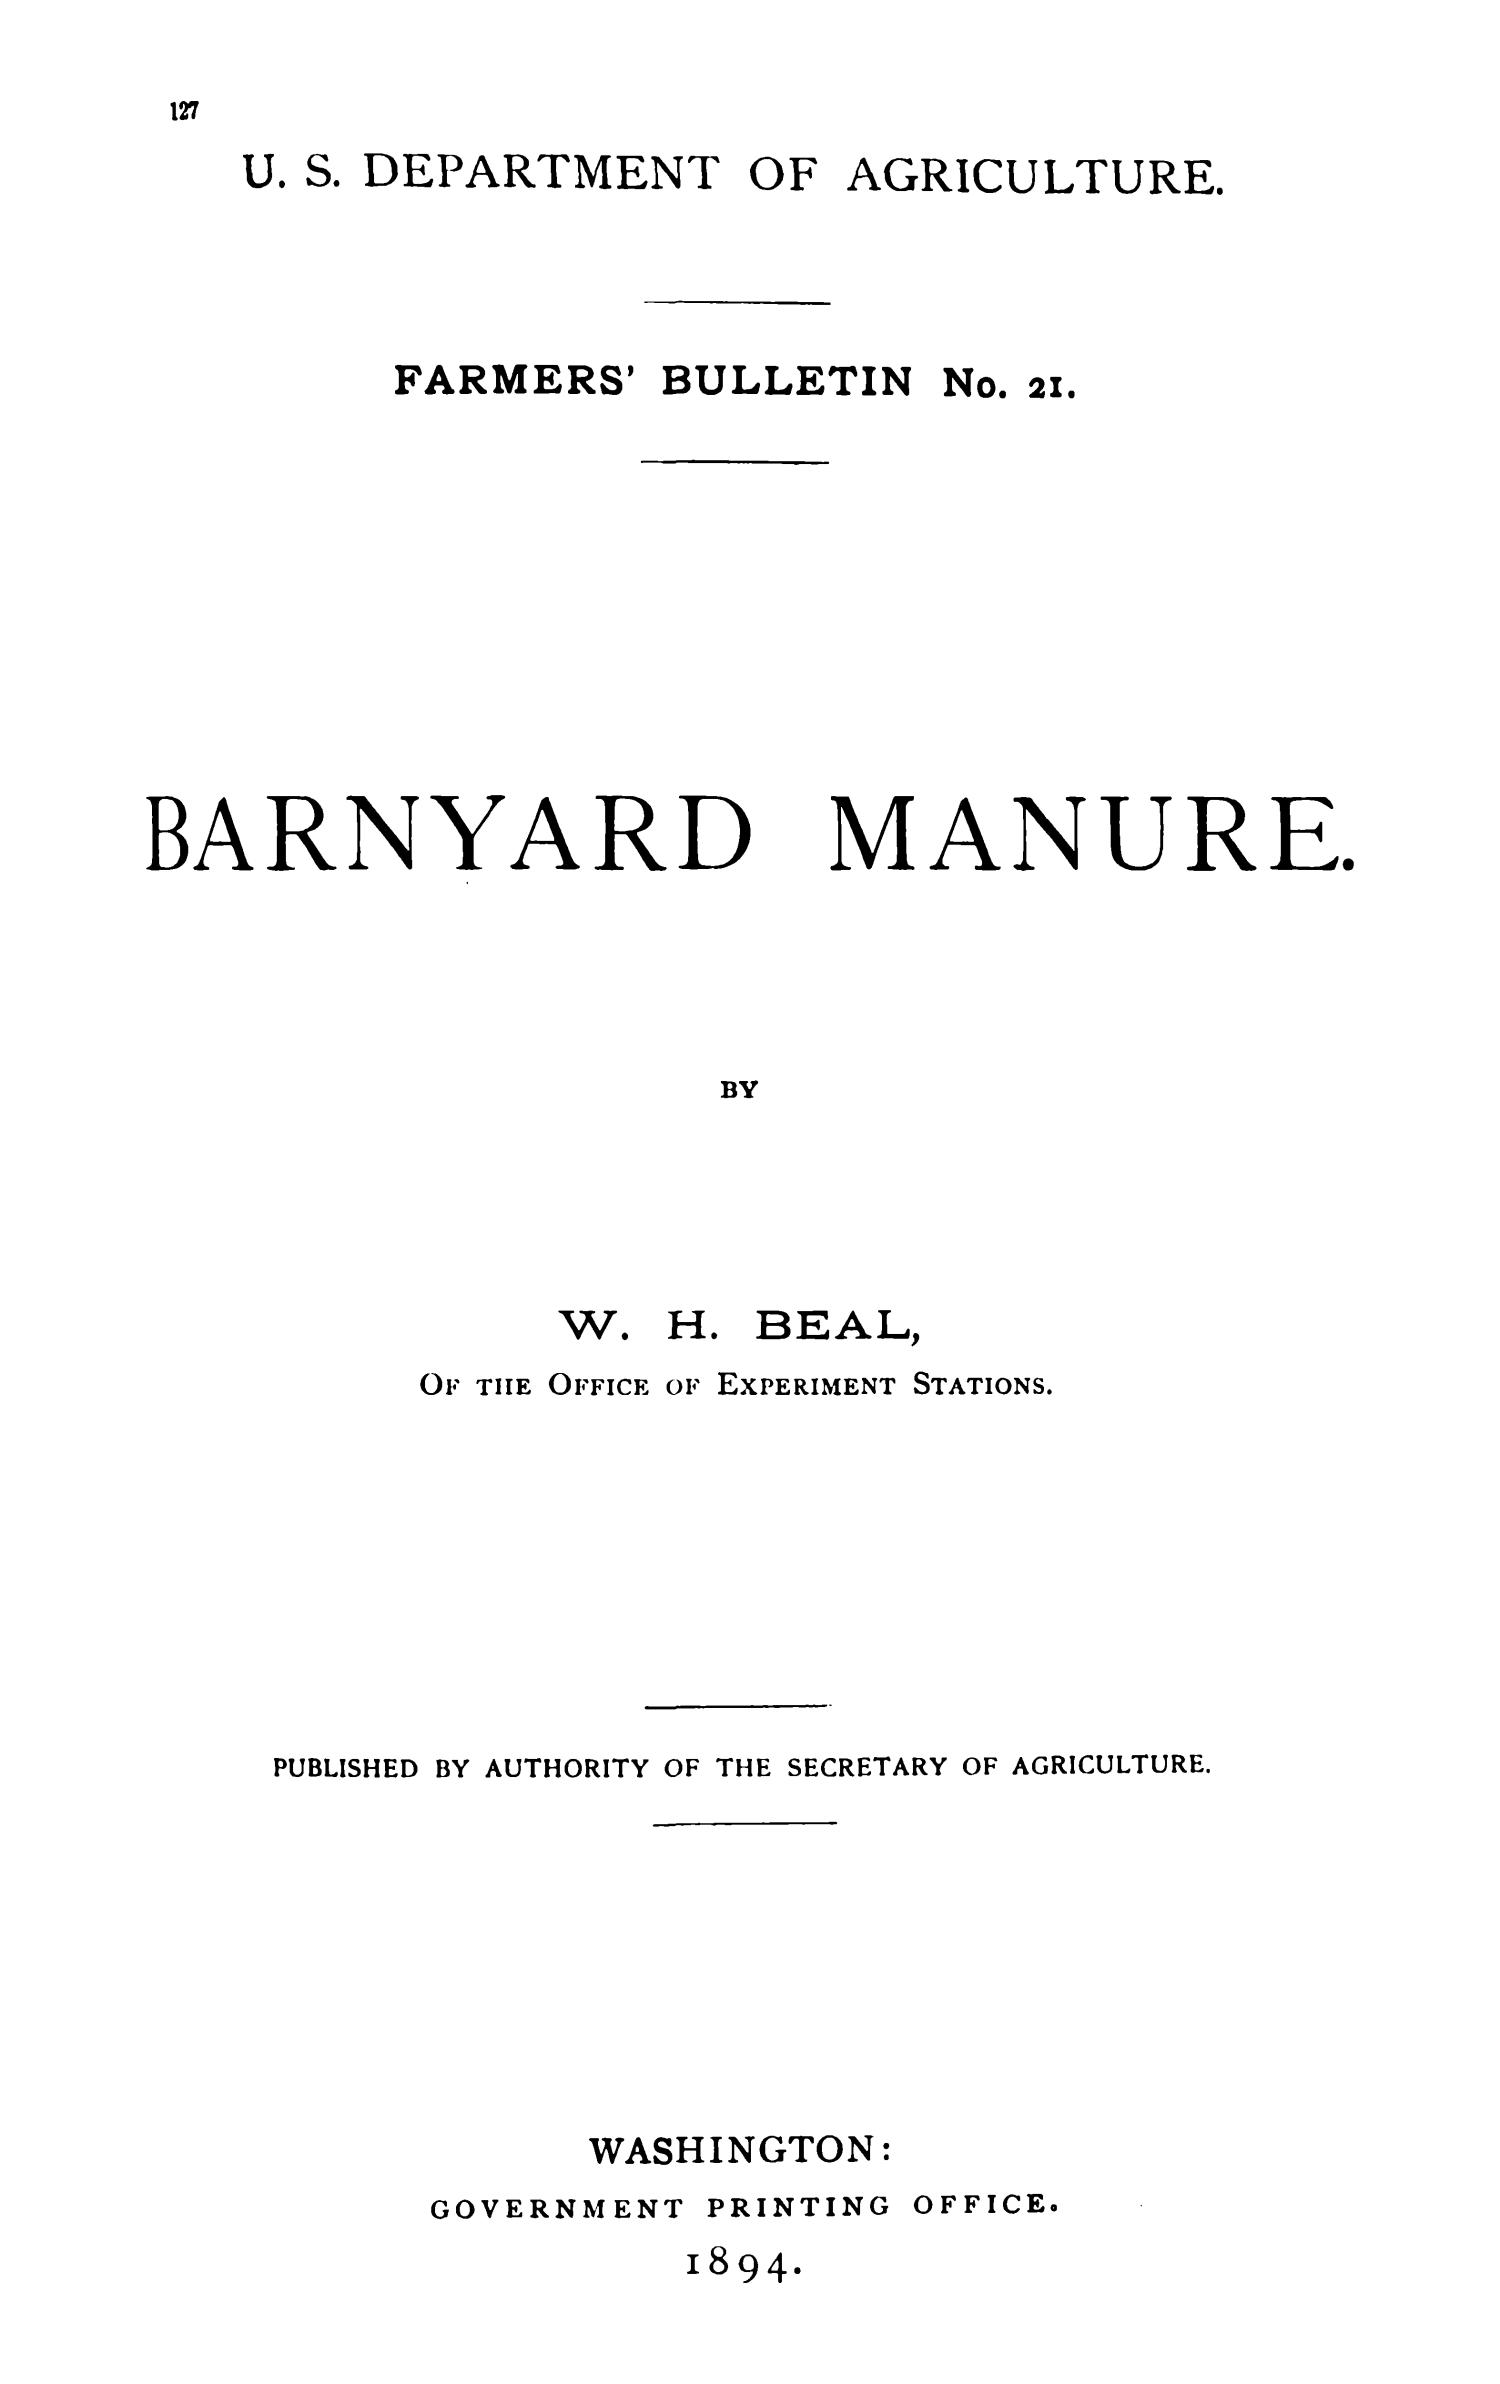 Barnyard Manure - UNT Digital Library